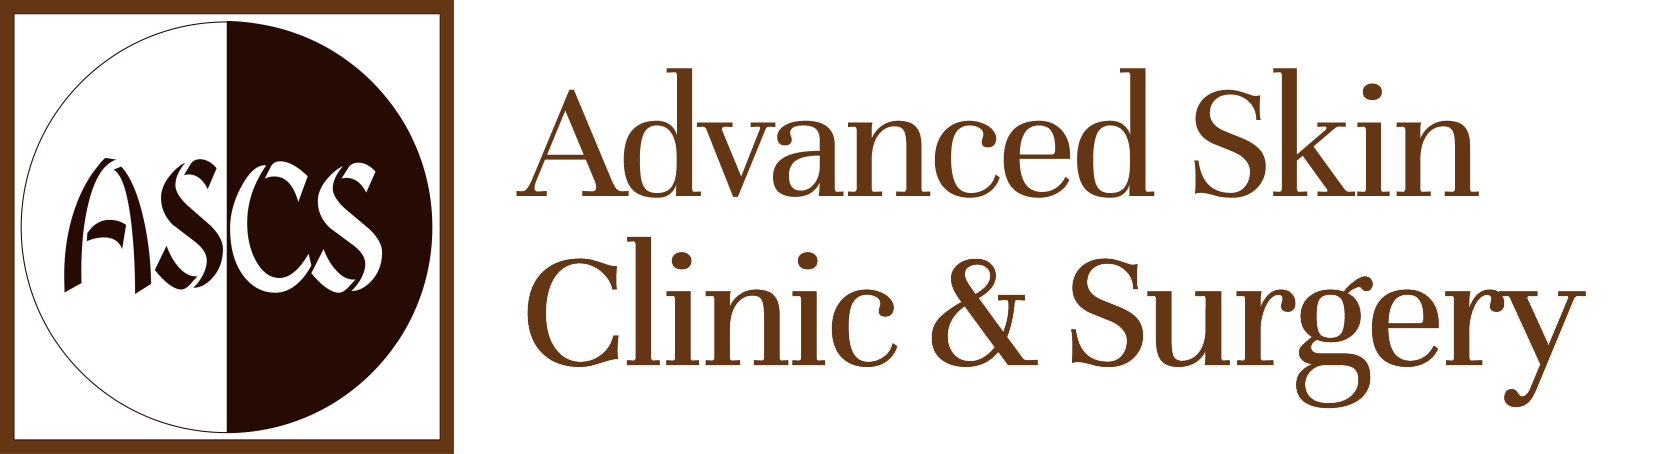 advanced skin clinic & surgery logo